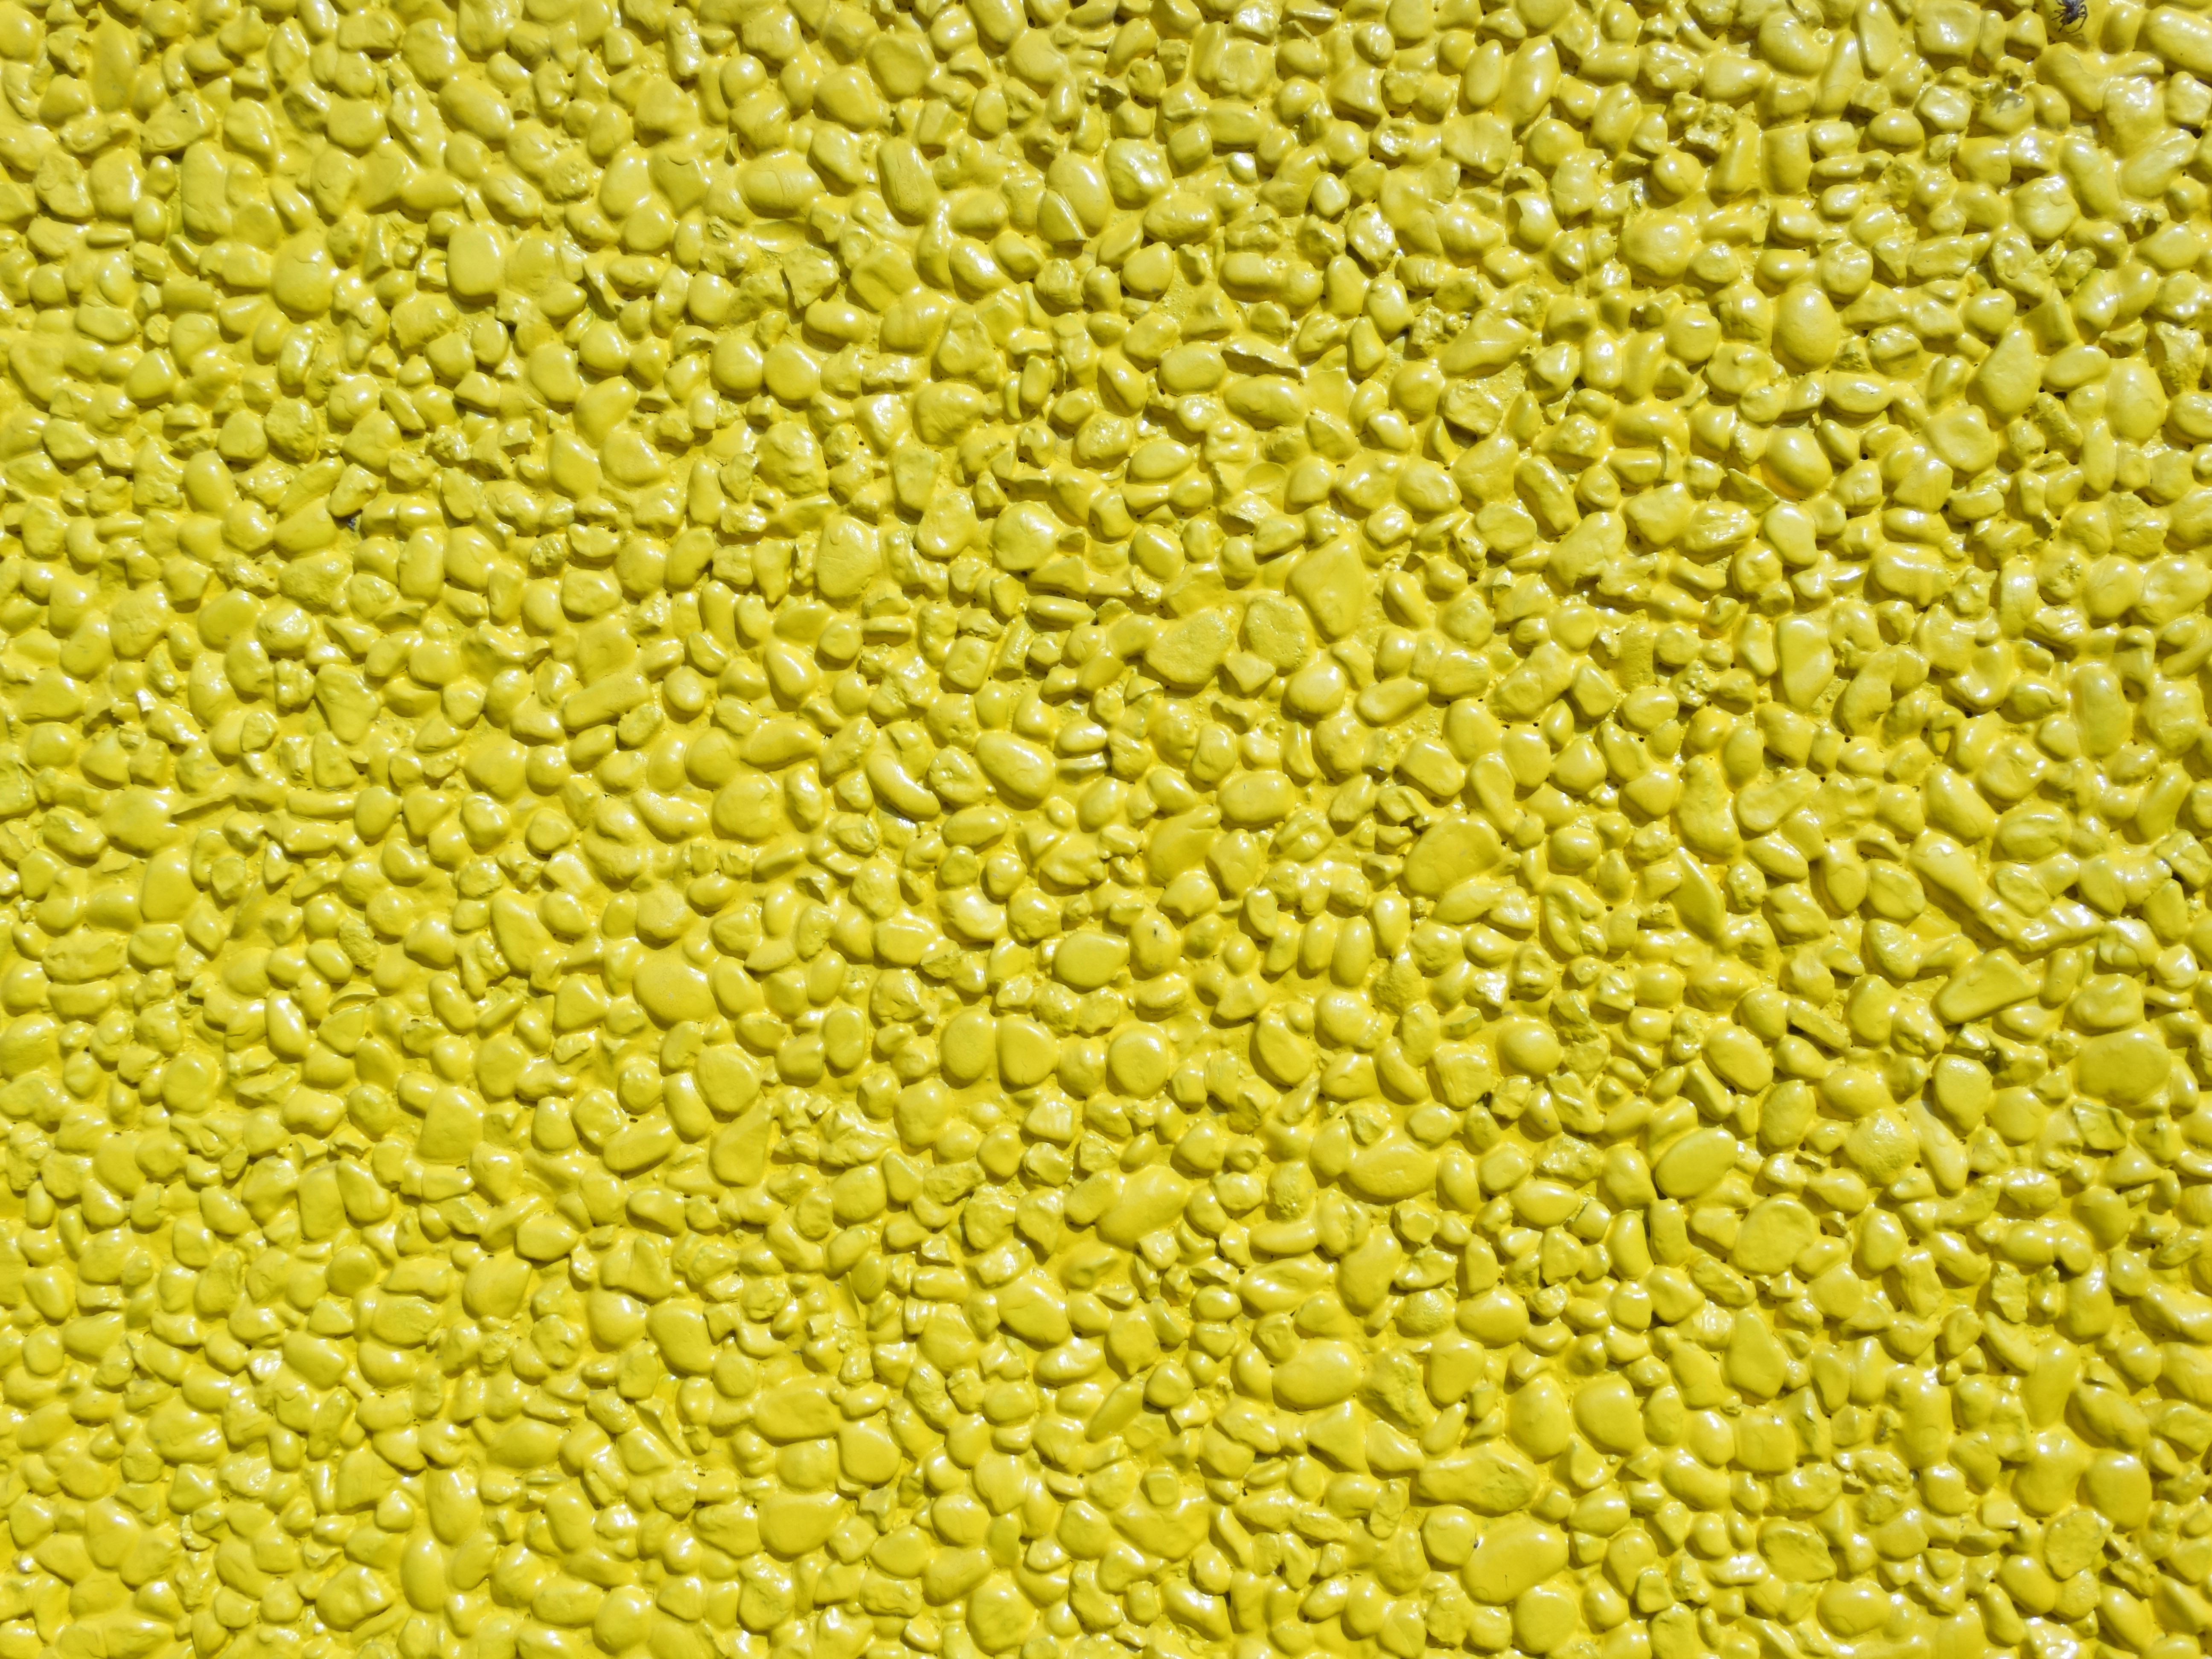 Download Yellow rocks background image - Free stock photo - Public Domain photo - CC0 Images